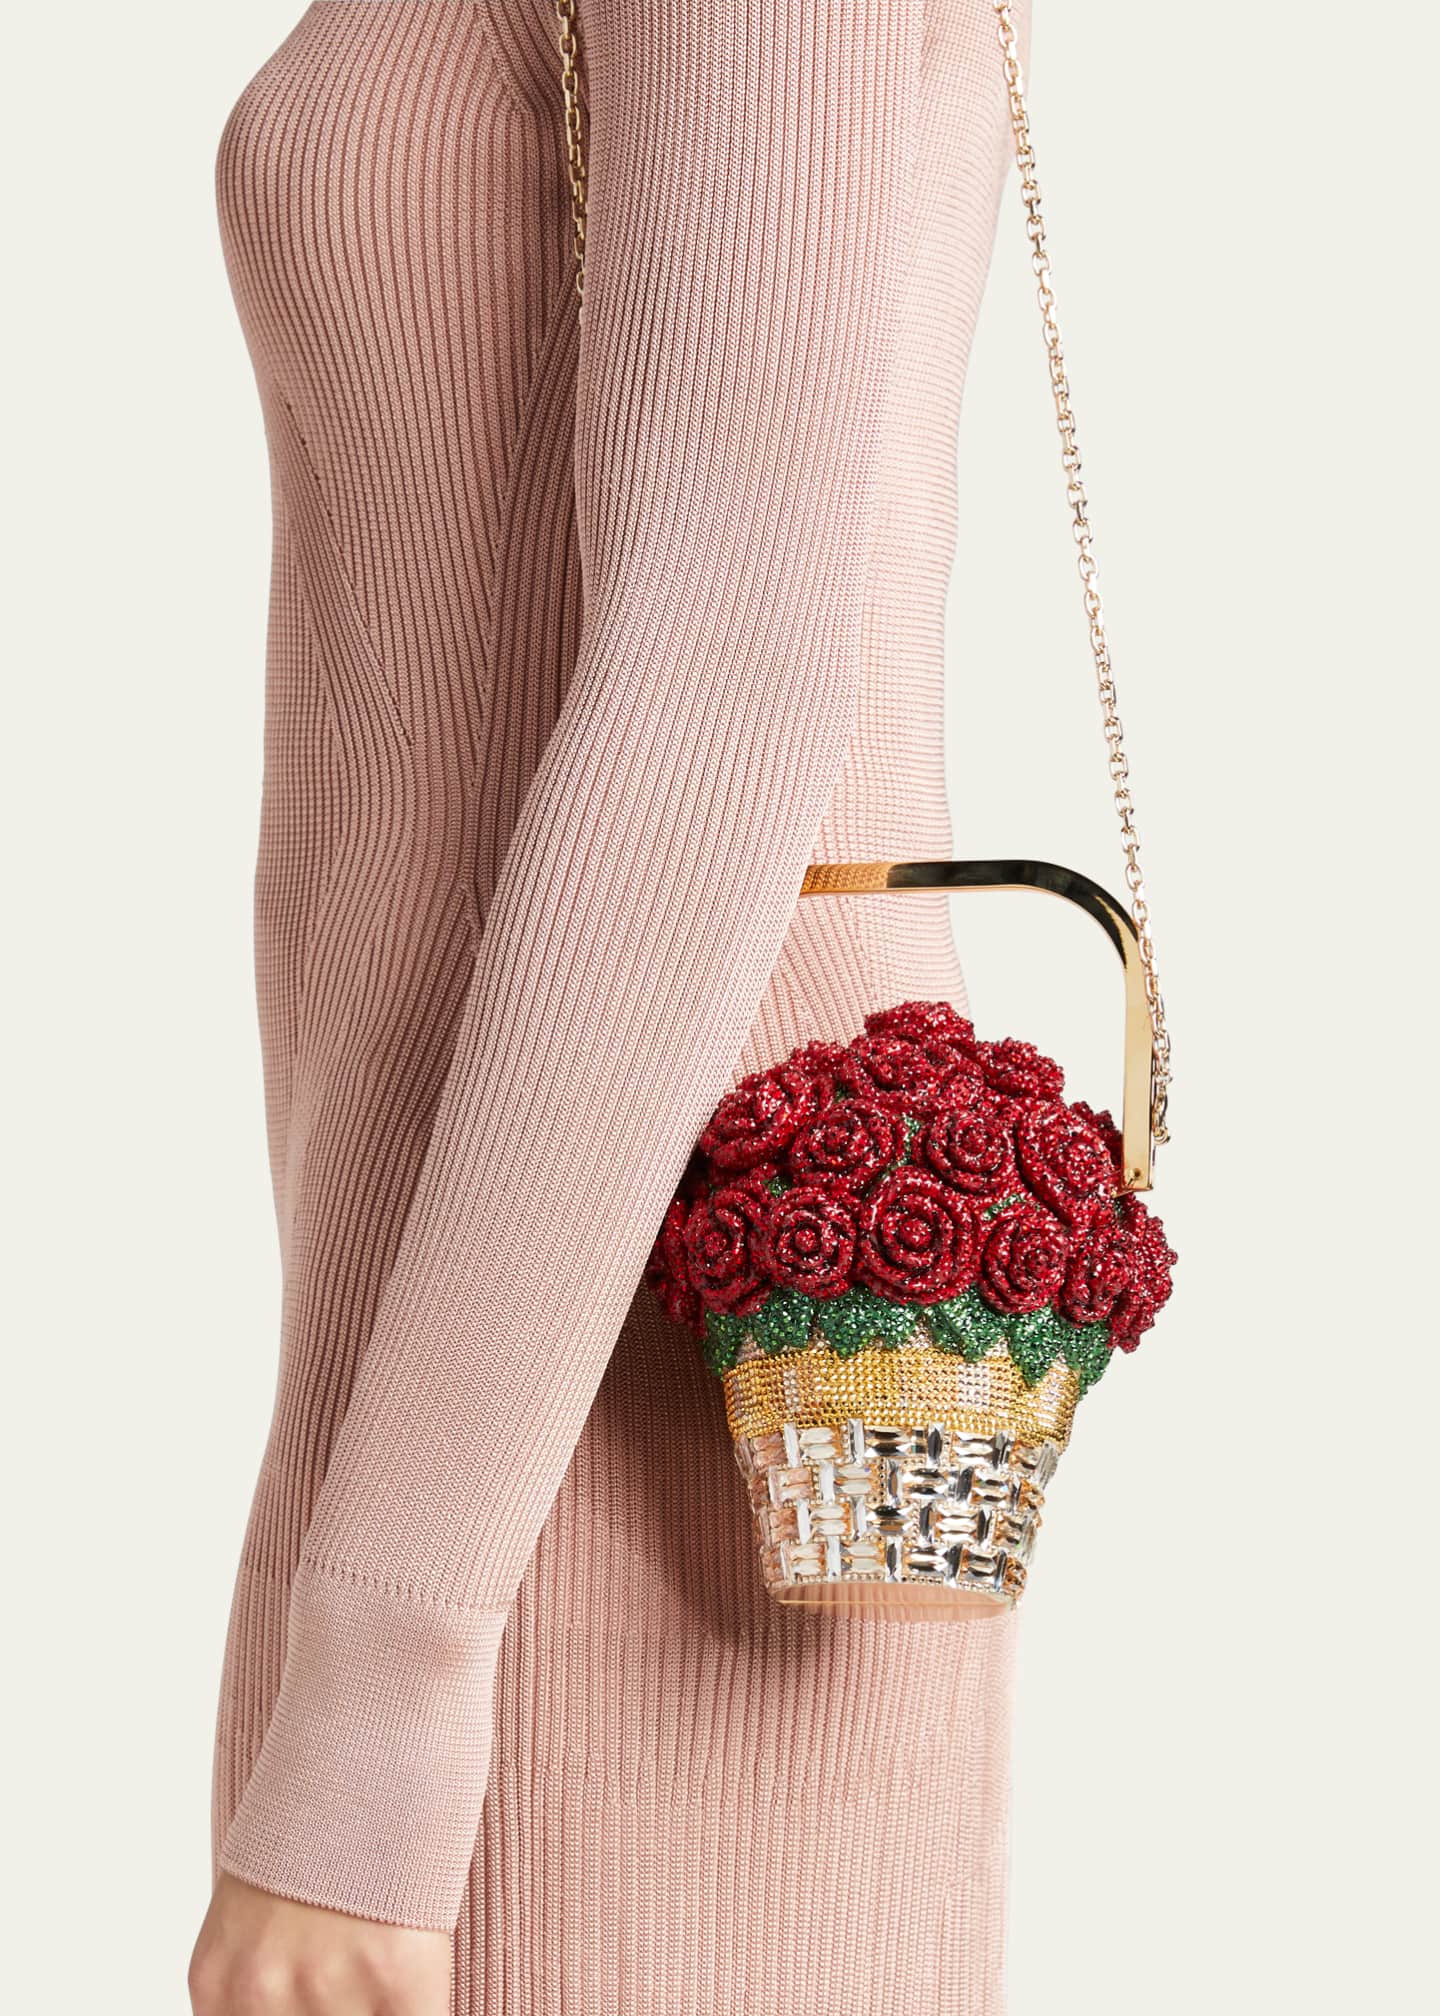 Judith Leiber Couture Strawberry Cupcake Crystal Evening Clutch Bag,  Gold/Rose/Multi - Bergdorf Goodman